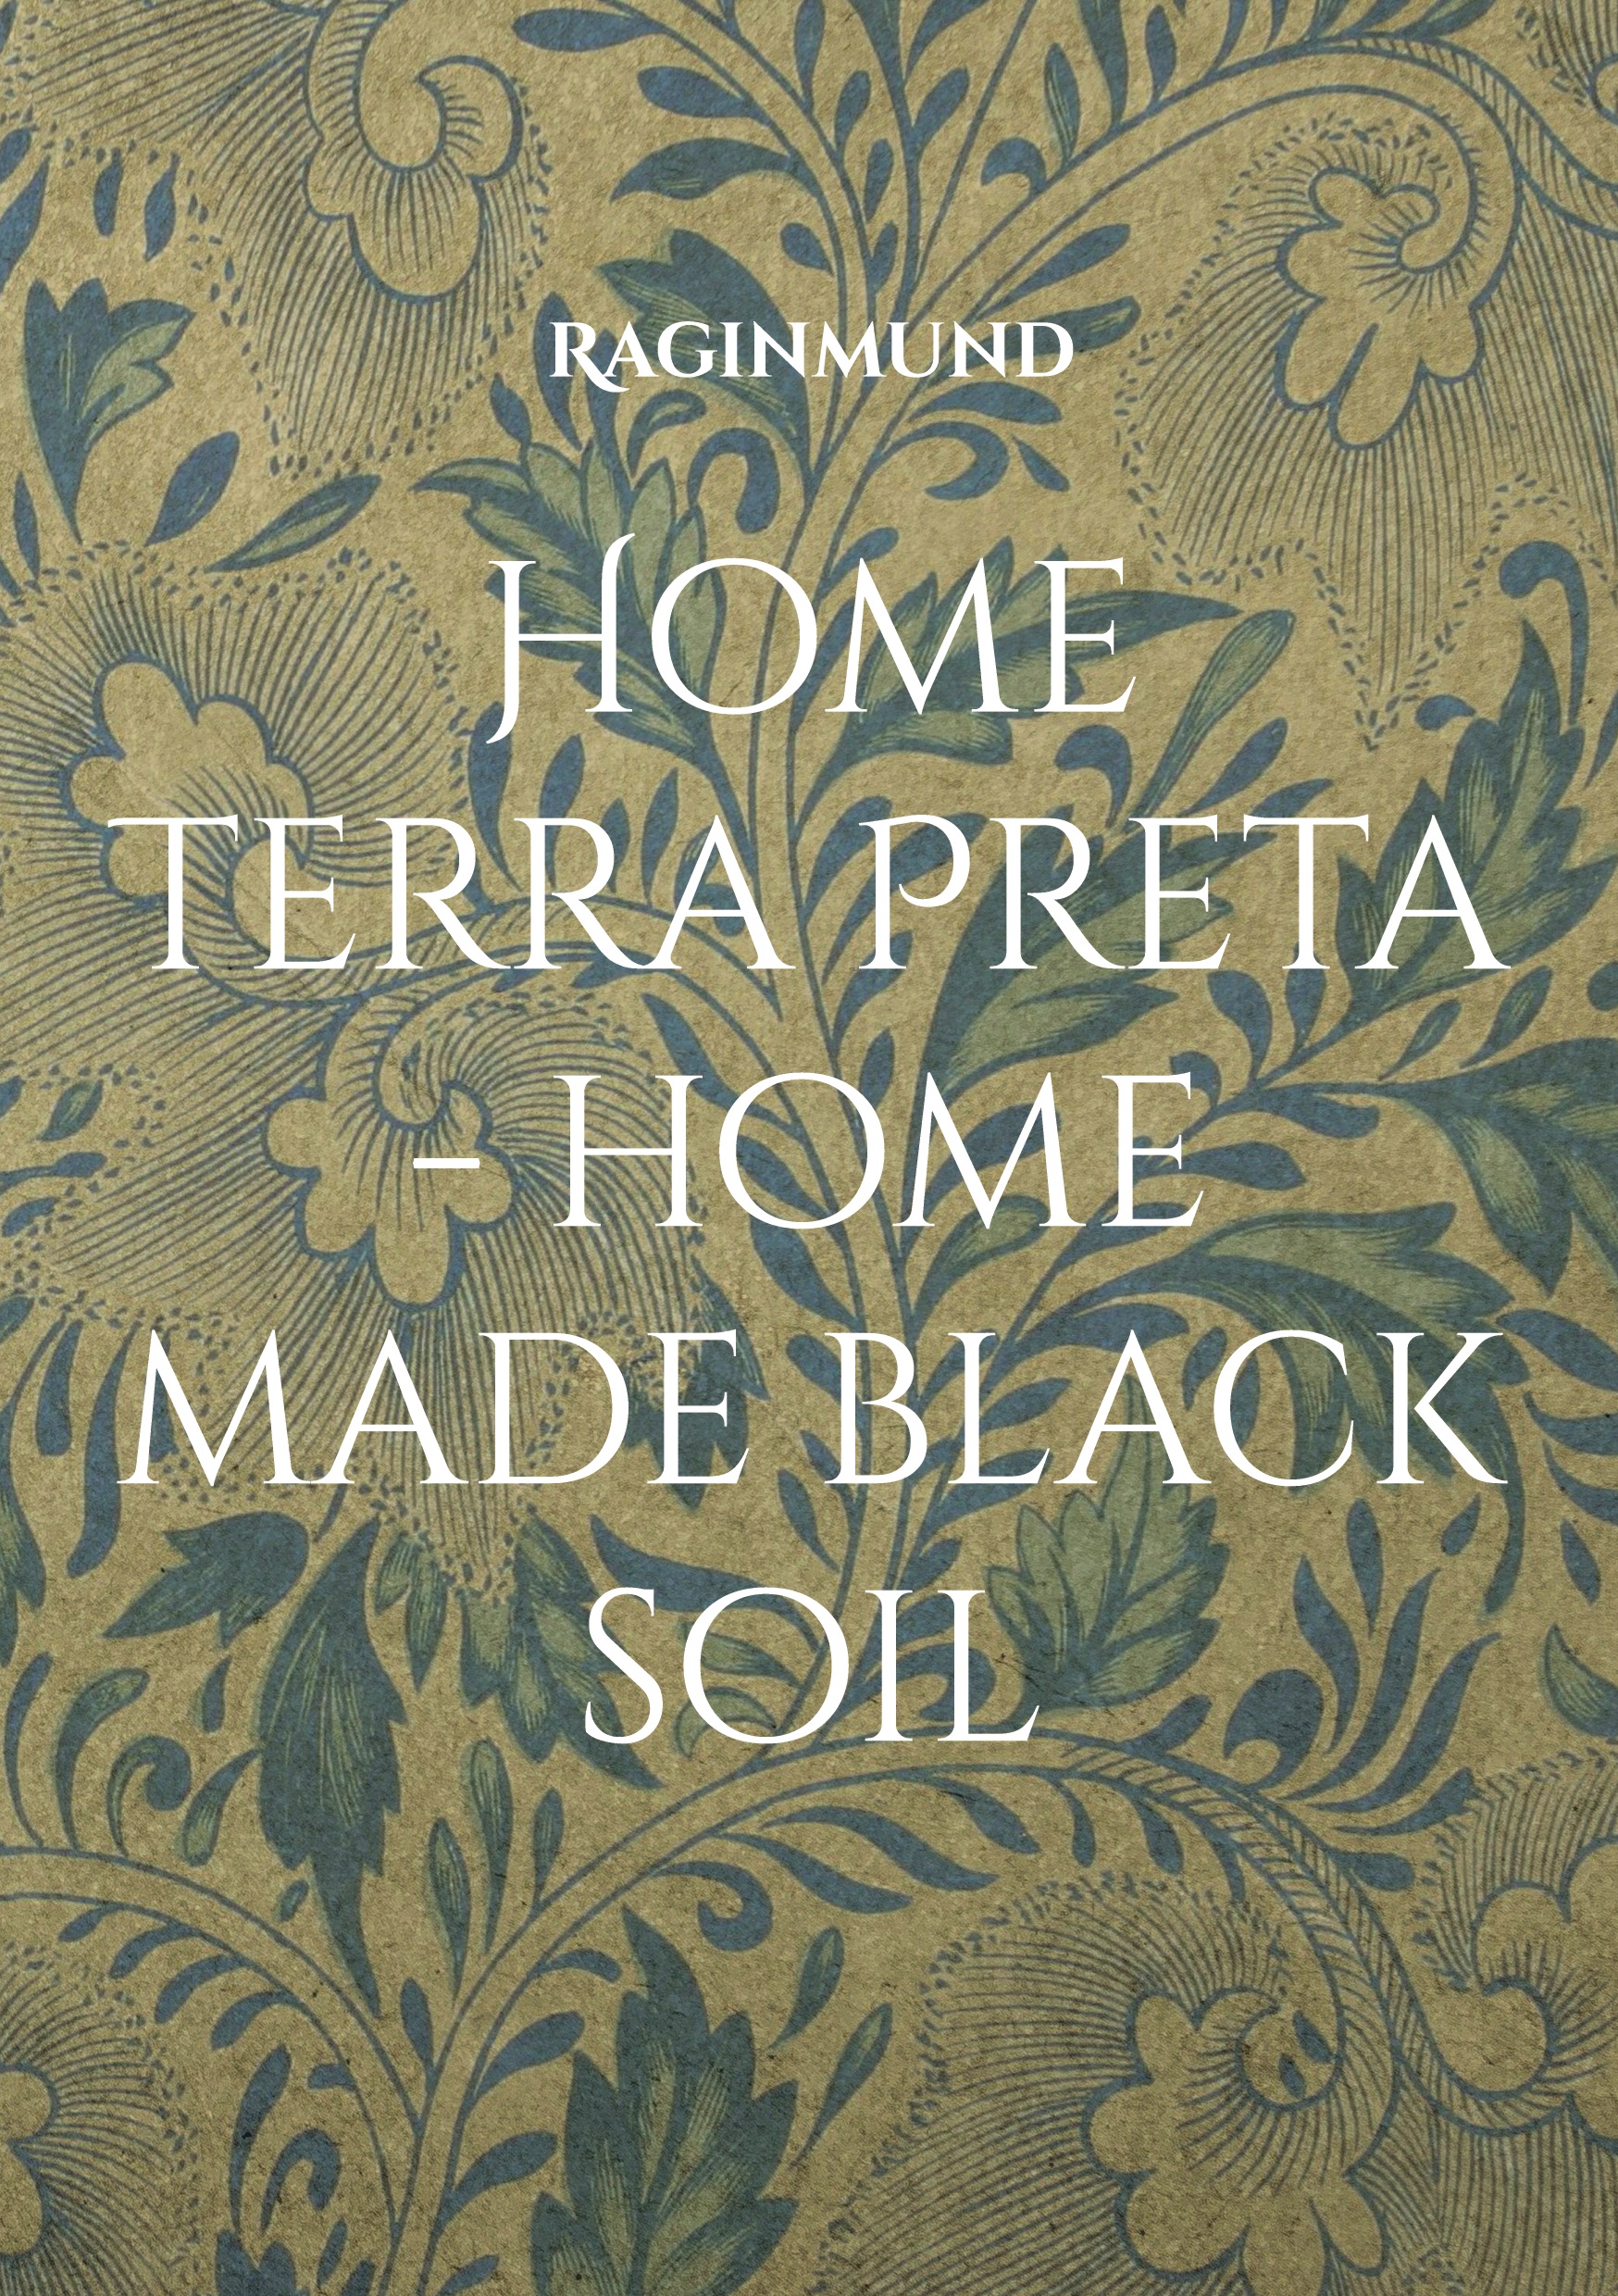 Home Terra Preta – home made black soil